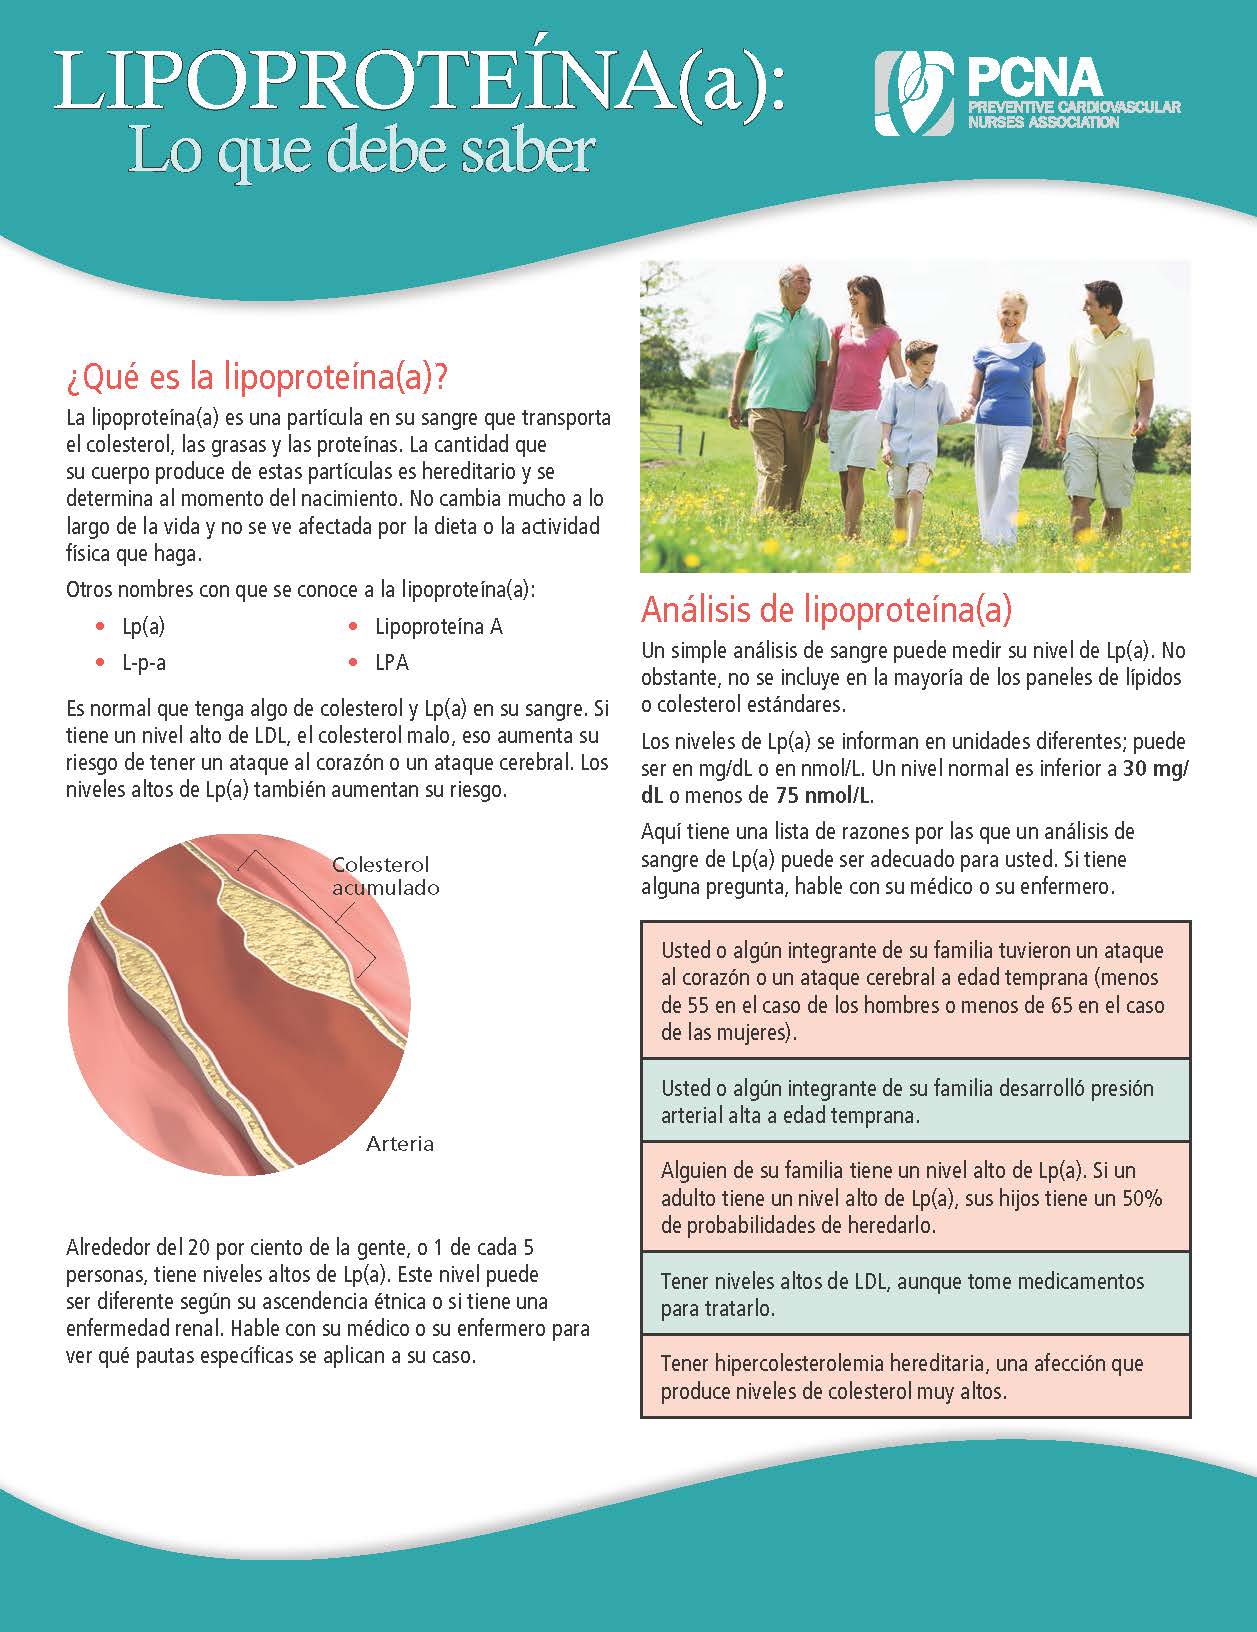 DOWNLOAD LP(a) Lipoprotein (Spanish) Fact Sheet